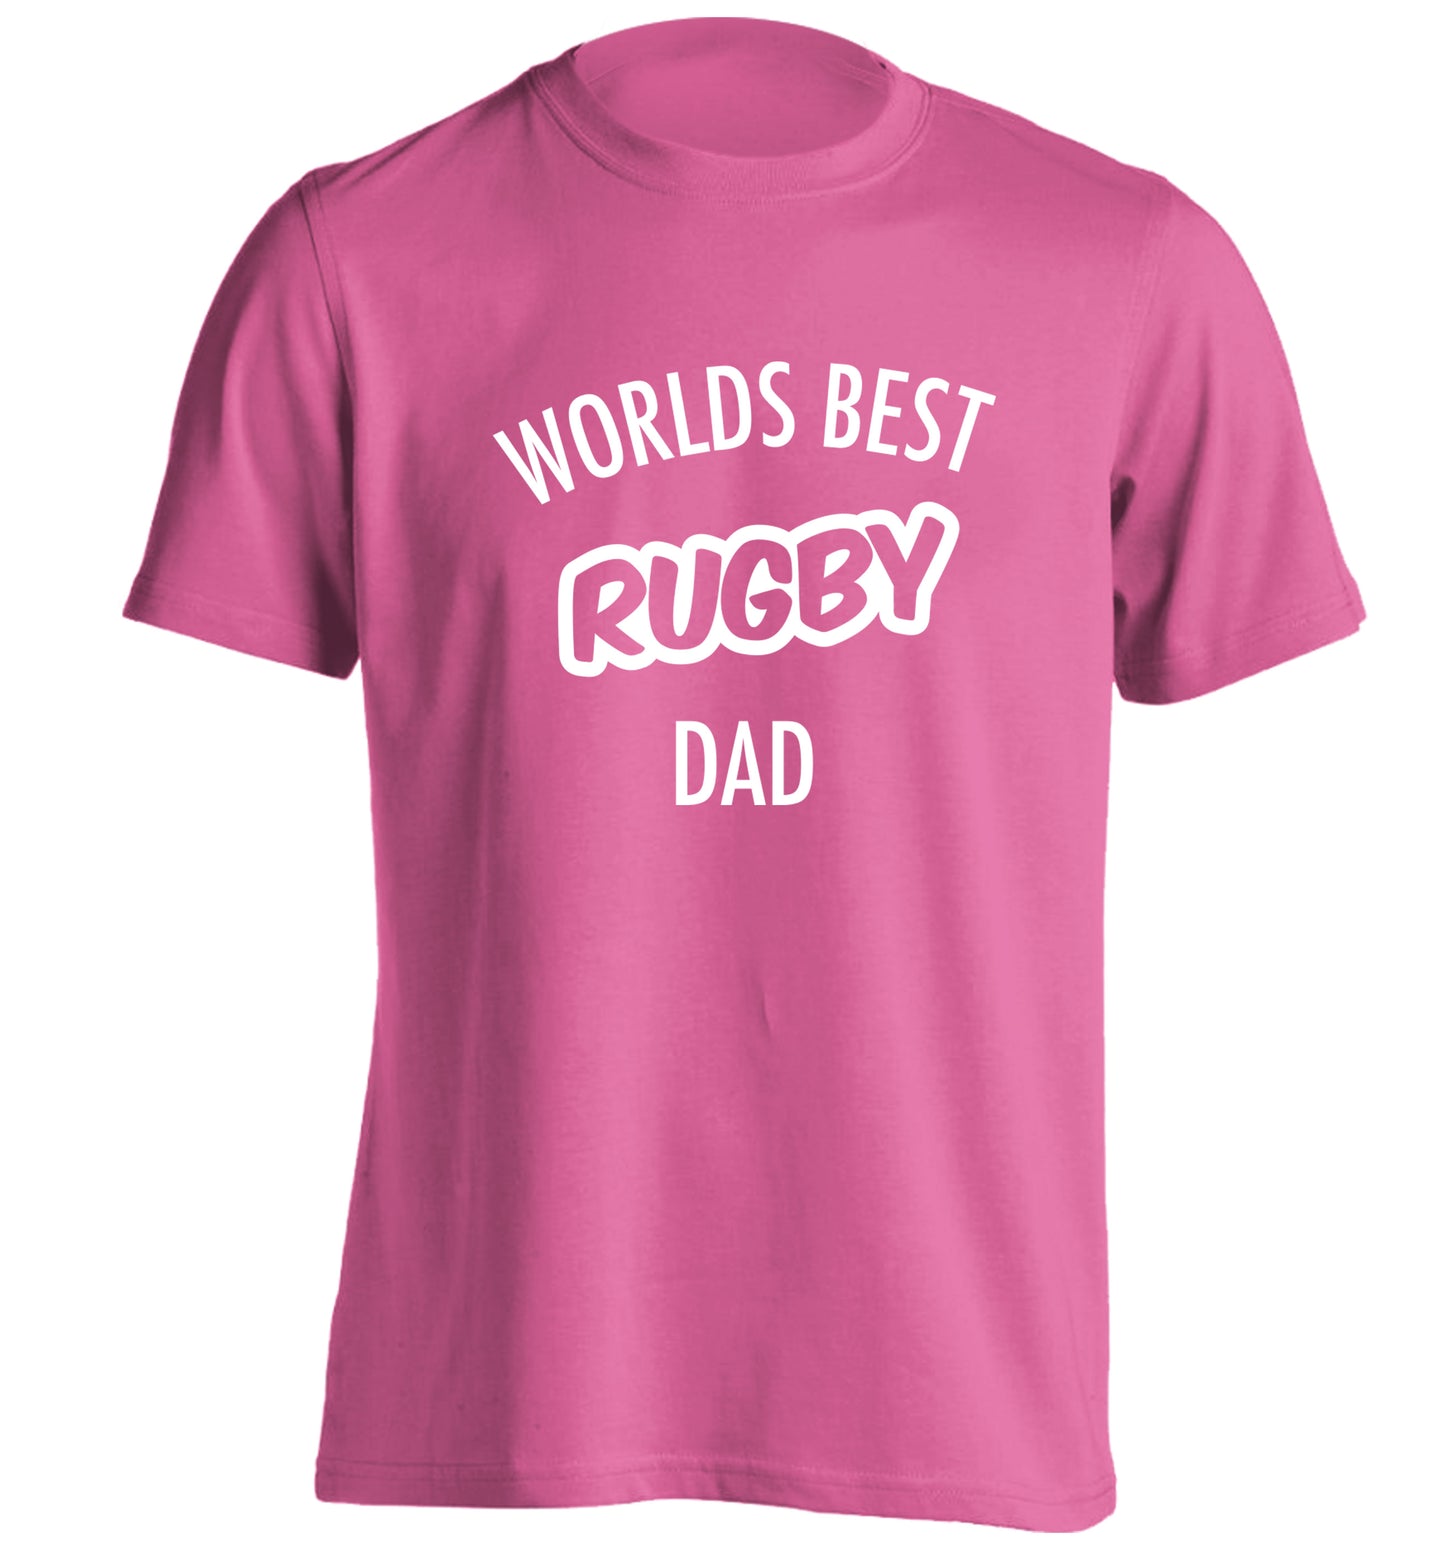 Worlds best rugby dad adults unisex pink Tshirt 2XL